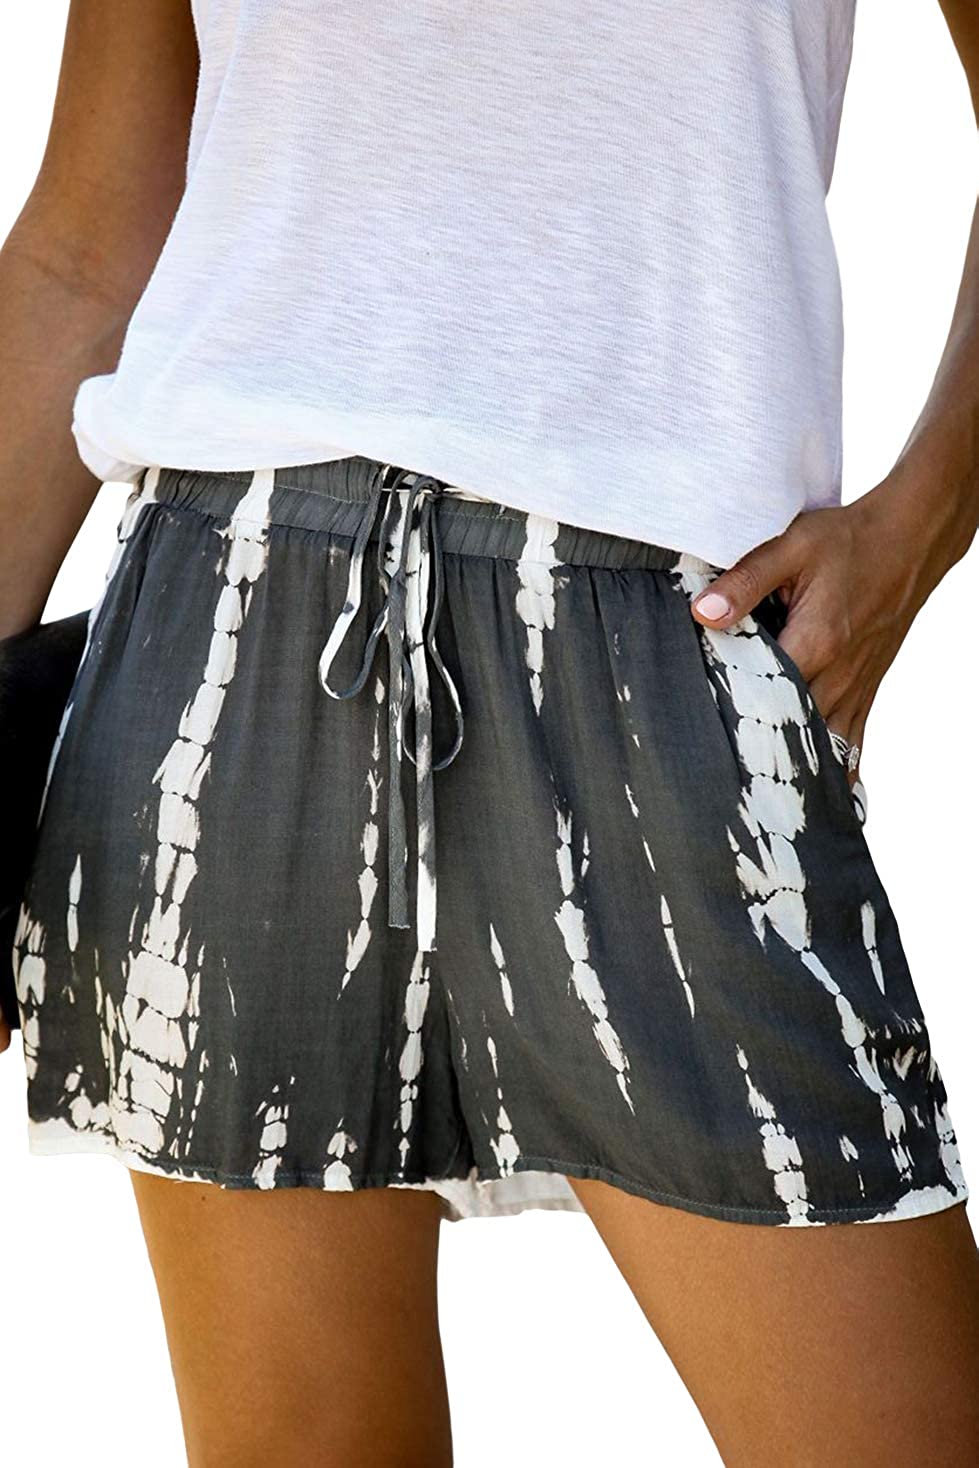 S-XXL CILKOO Womens Comfy Drawstring Casual Elastic Waist Pocketed Shorts